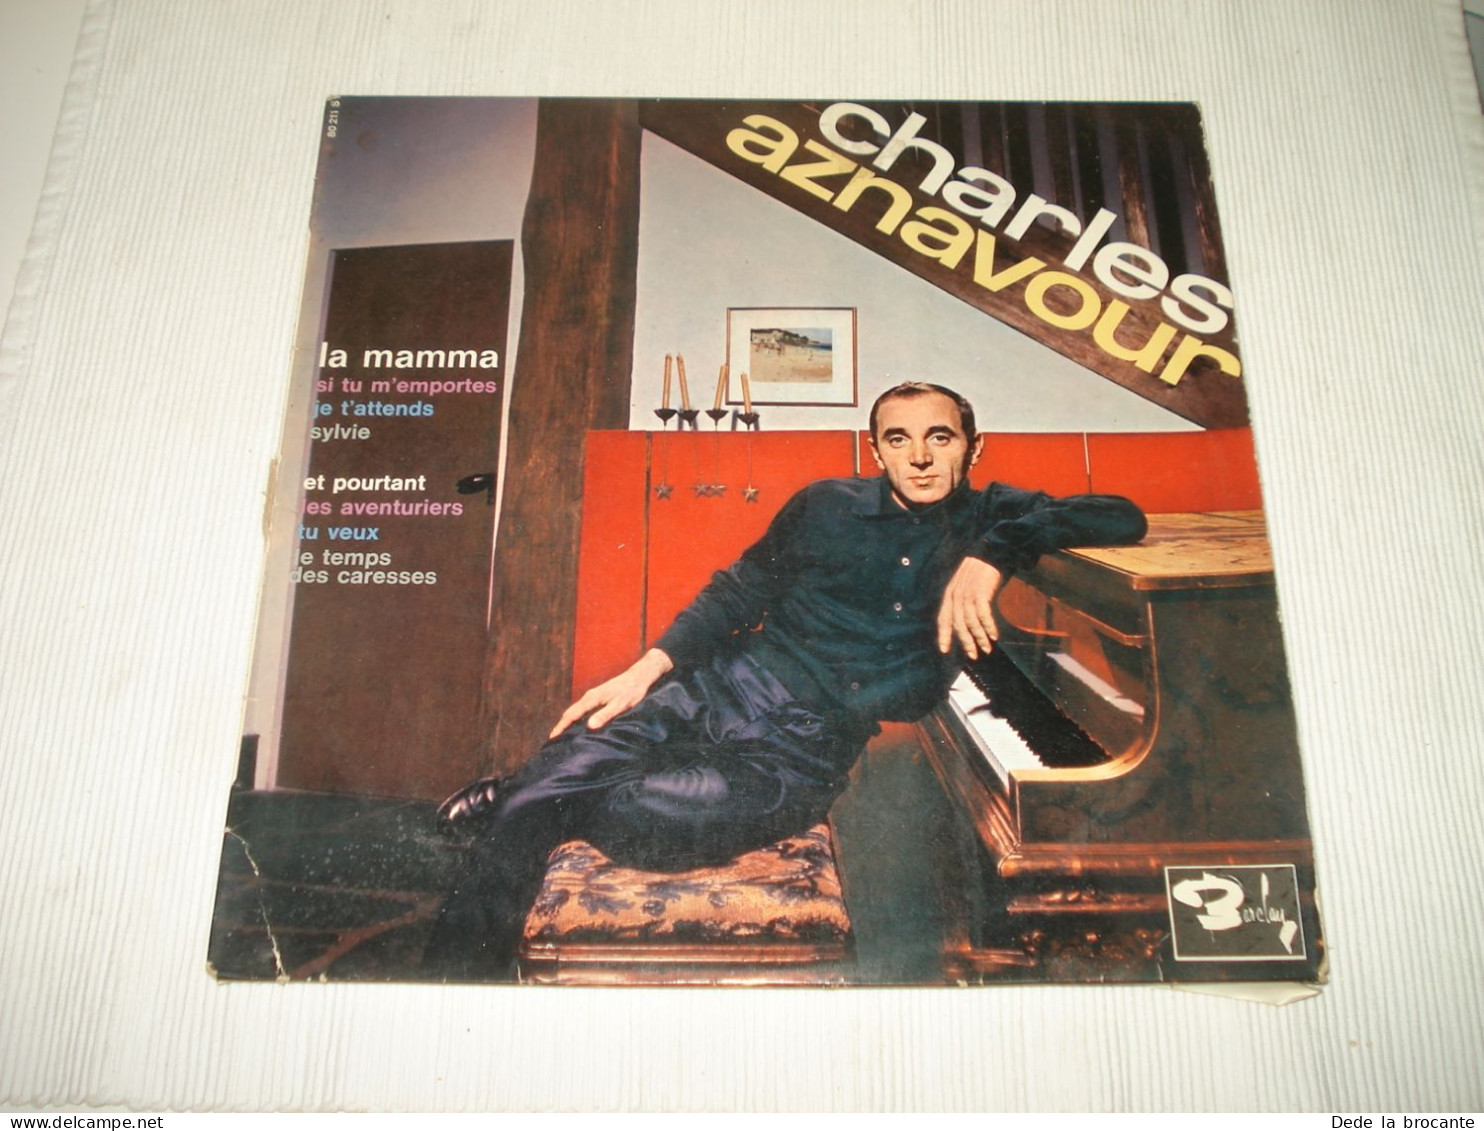 B14 / Charles Aznavour – La Mamma - 33T - 10" – 80 211 - FR 1963  VG+/VG- - Formati Speciali